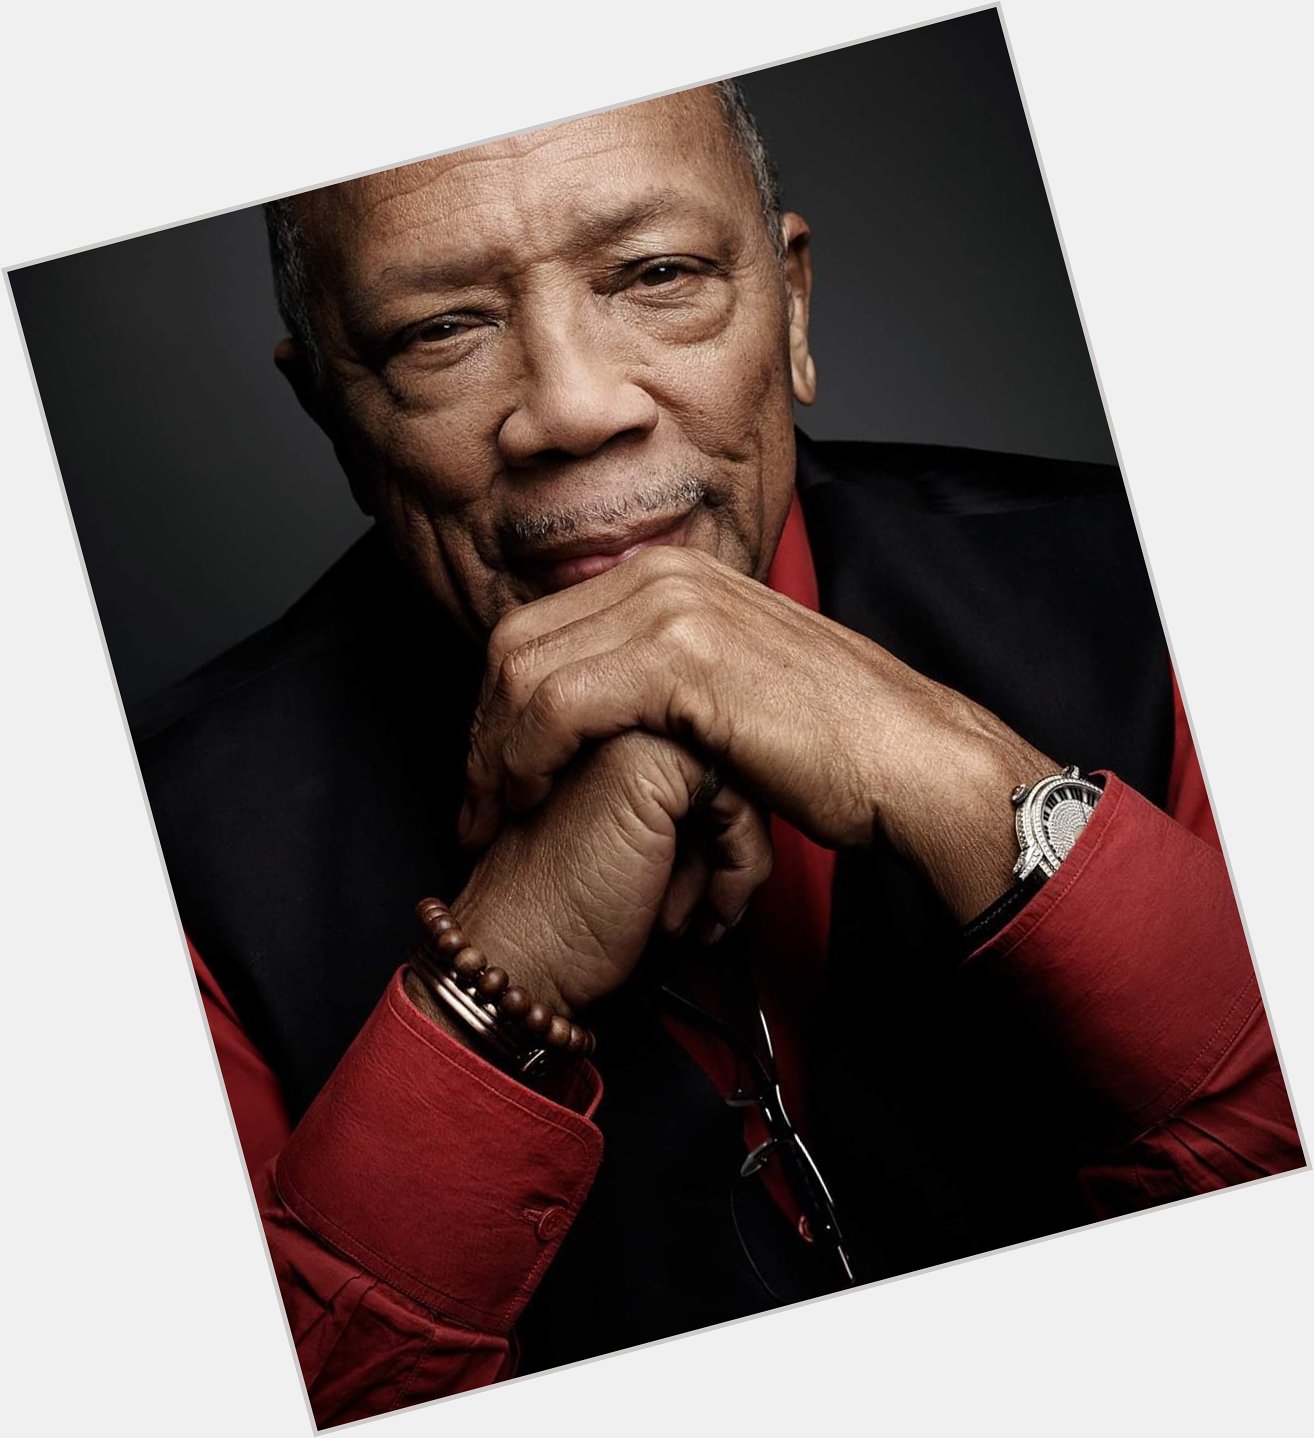 89 today, Happy birthday Quincy Jones 